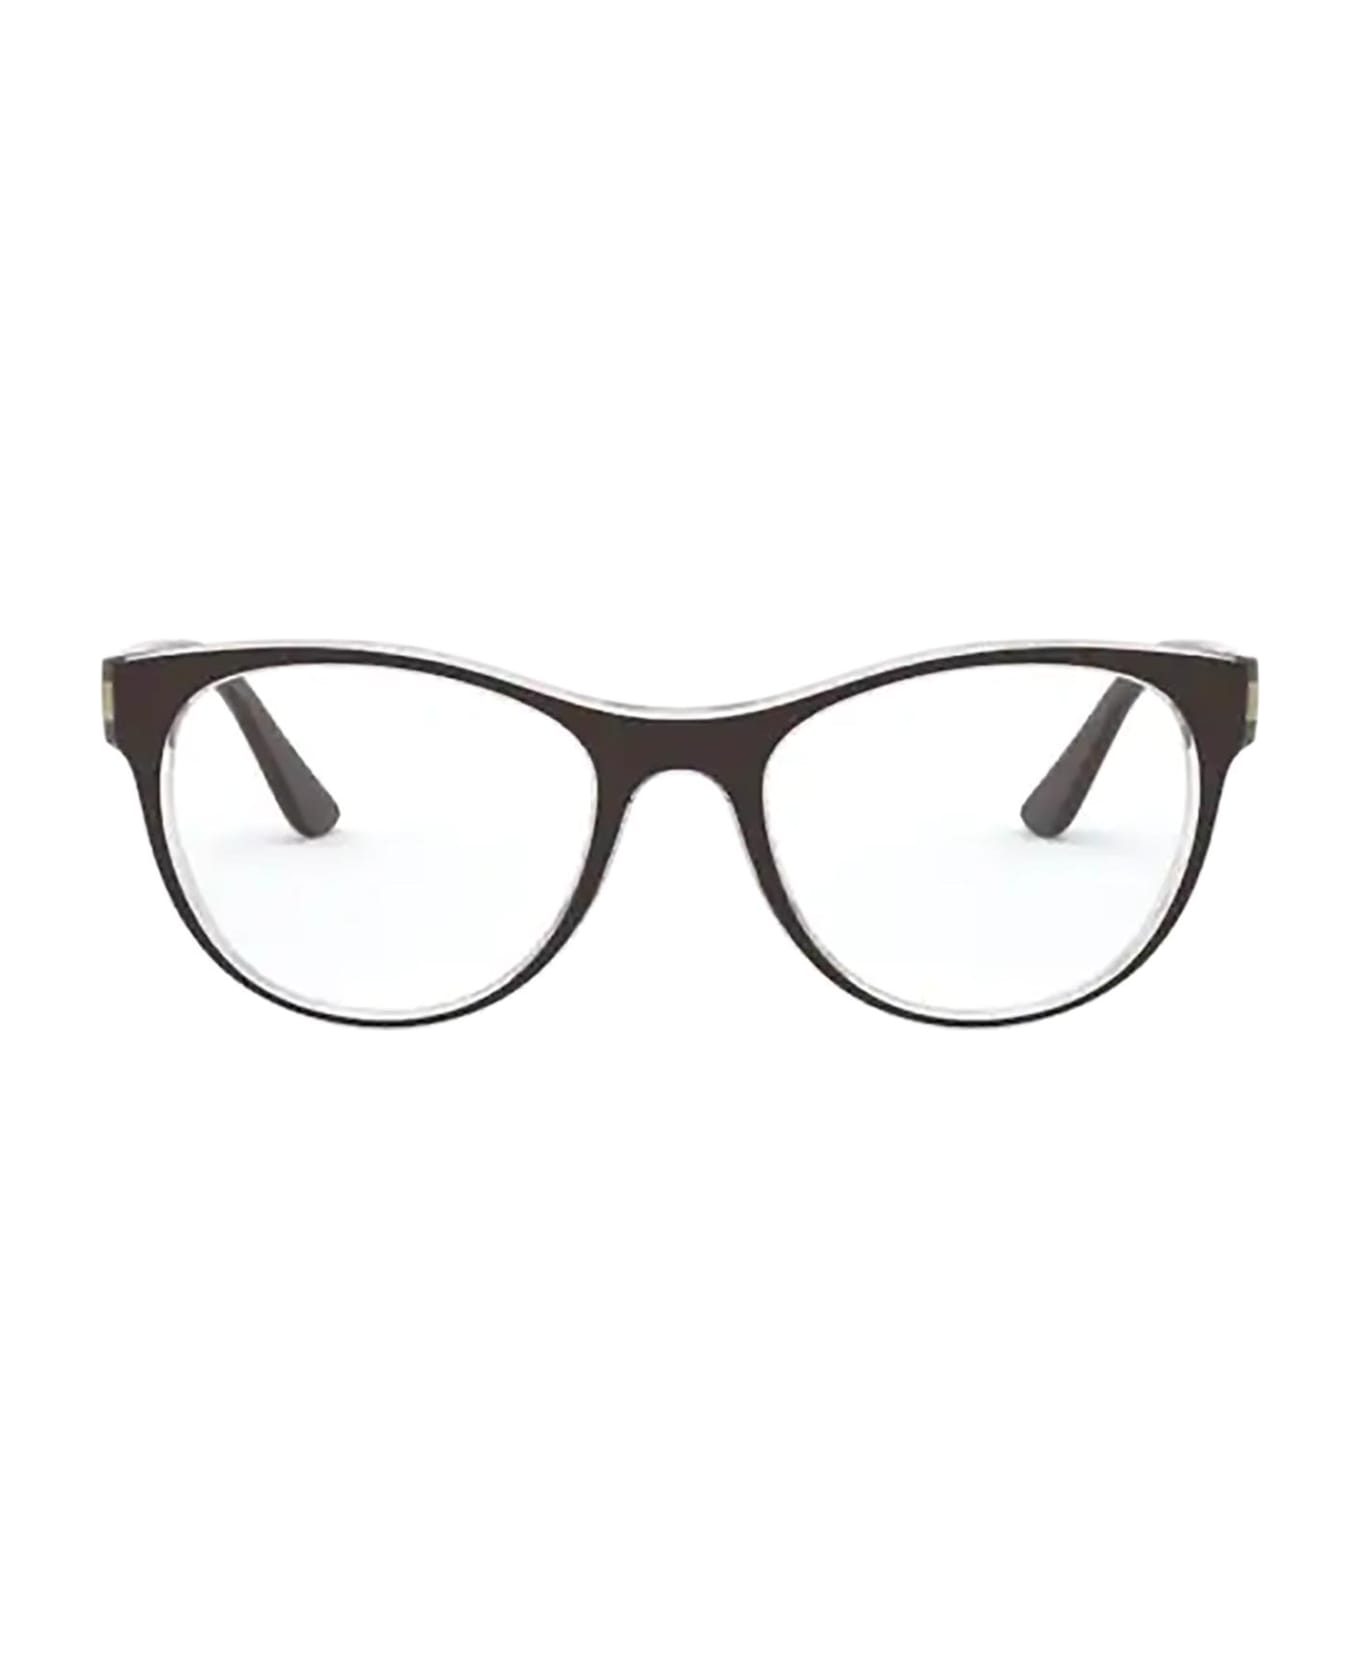 Vogue Eyewear Vo5336 Top Brown / Serigraphy Glasses - TOP BROWN / SERIGRAPHY